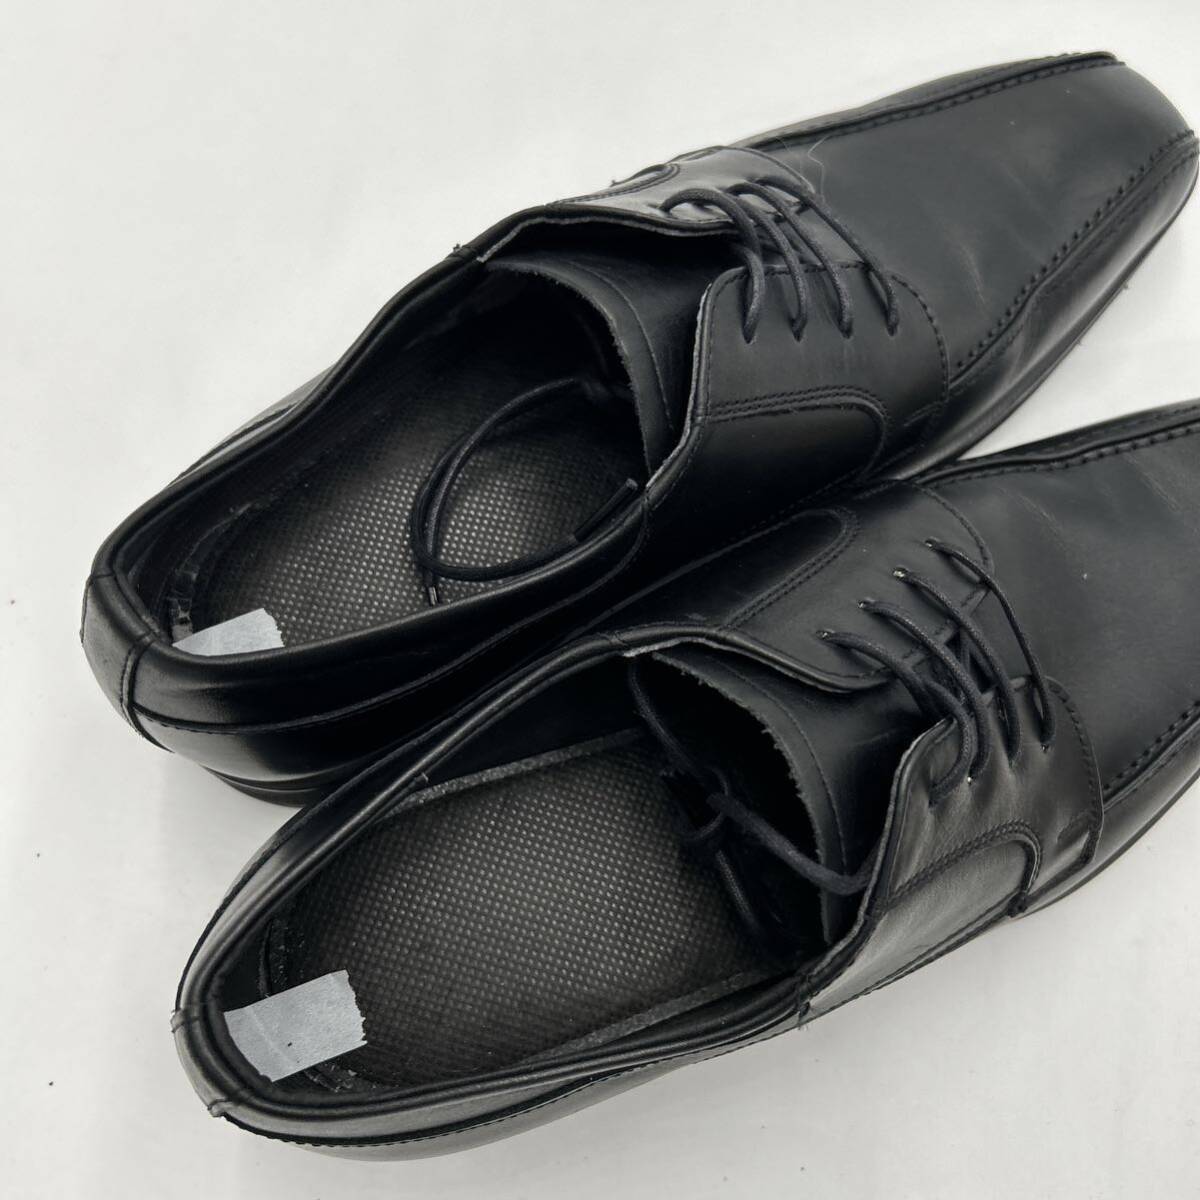 C ■ 日本製 '履き心地抜群' REGAL リーガル LEATHER ビジネスシューズ 革靴 25cm EEE 洗礼されたデザイン 紳士靴 BLACK 外羽根式 黒_画像8